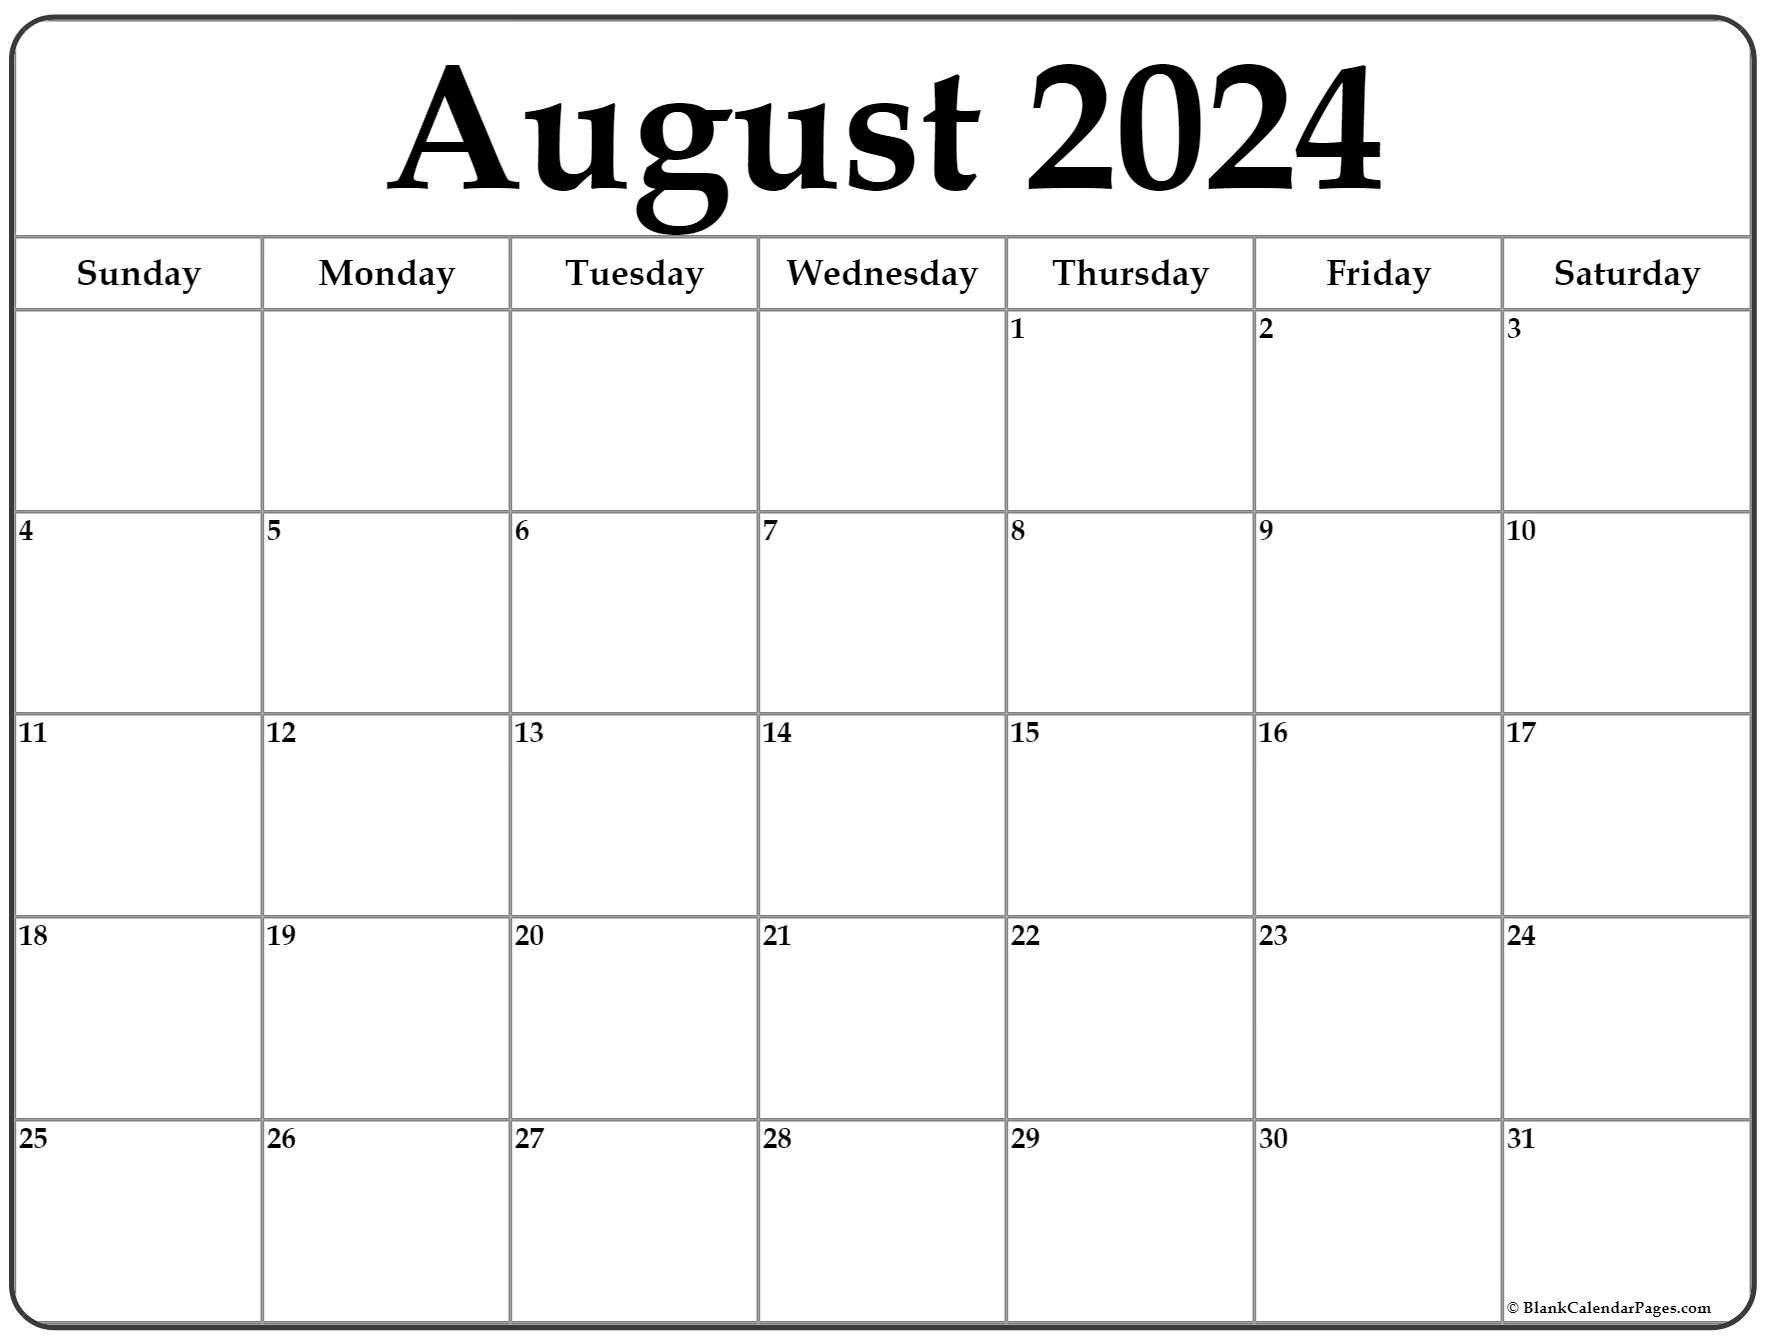 Printable Calendar 2022 August August 2022 Calendar | Free Printable Calendar Templates